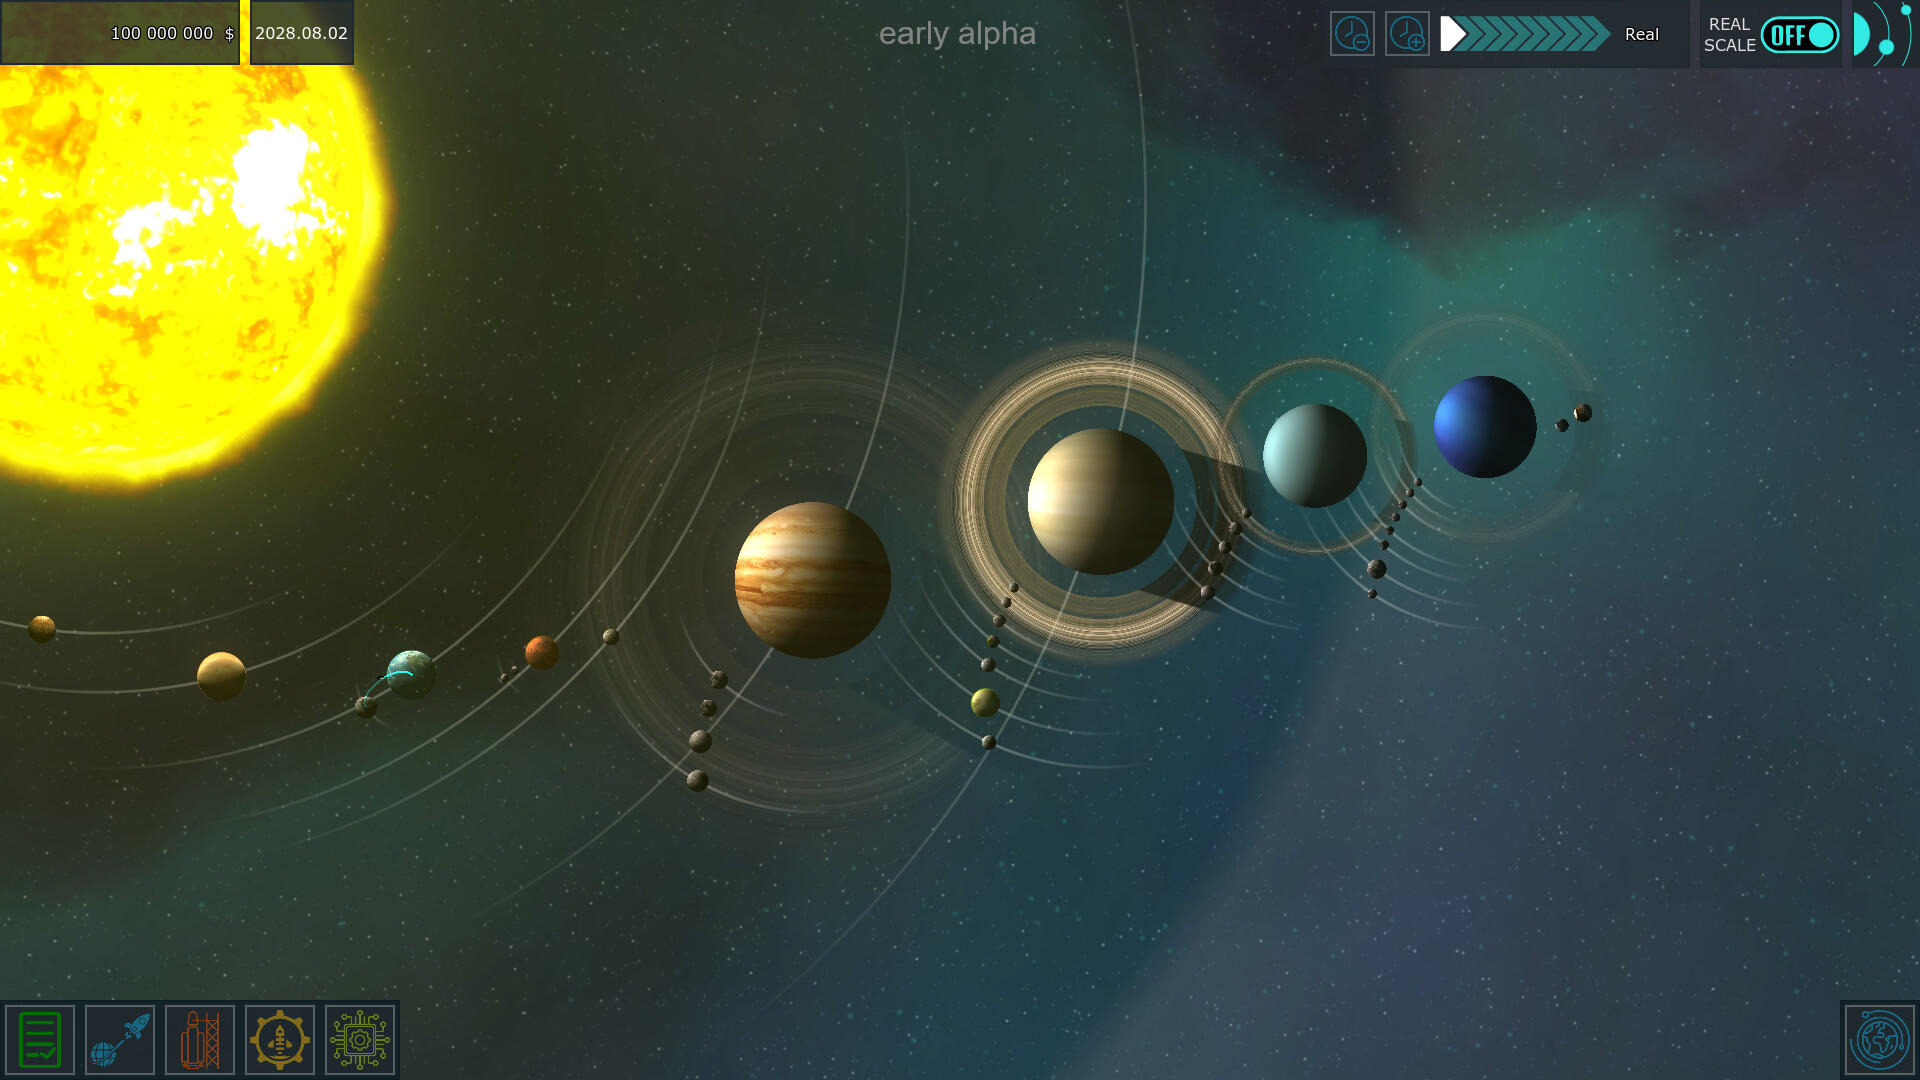 Screenshot 1 of Enterprise - Simulateur d'agence spatiale 